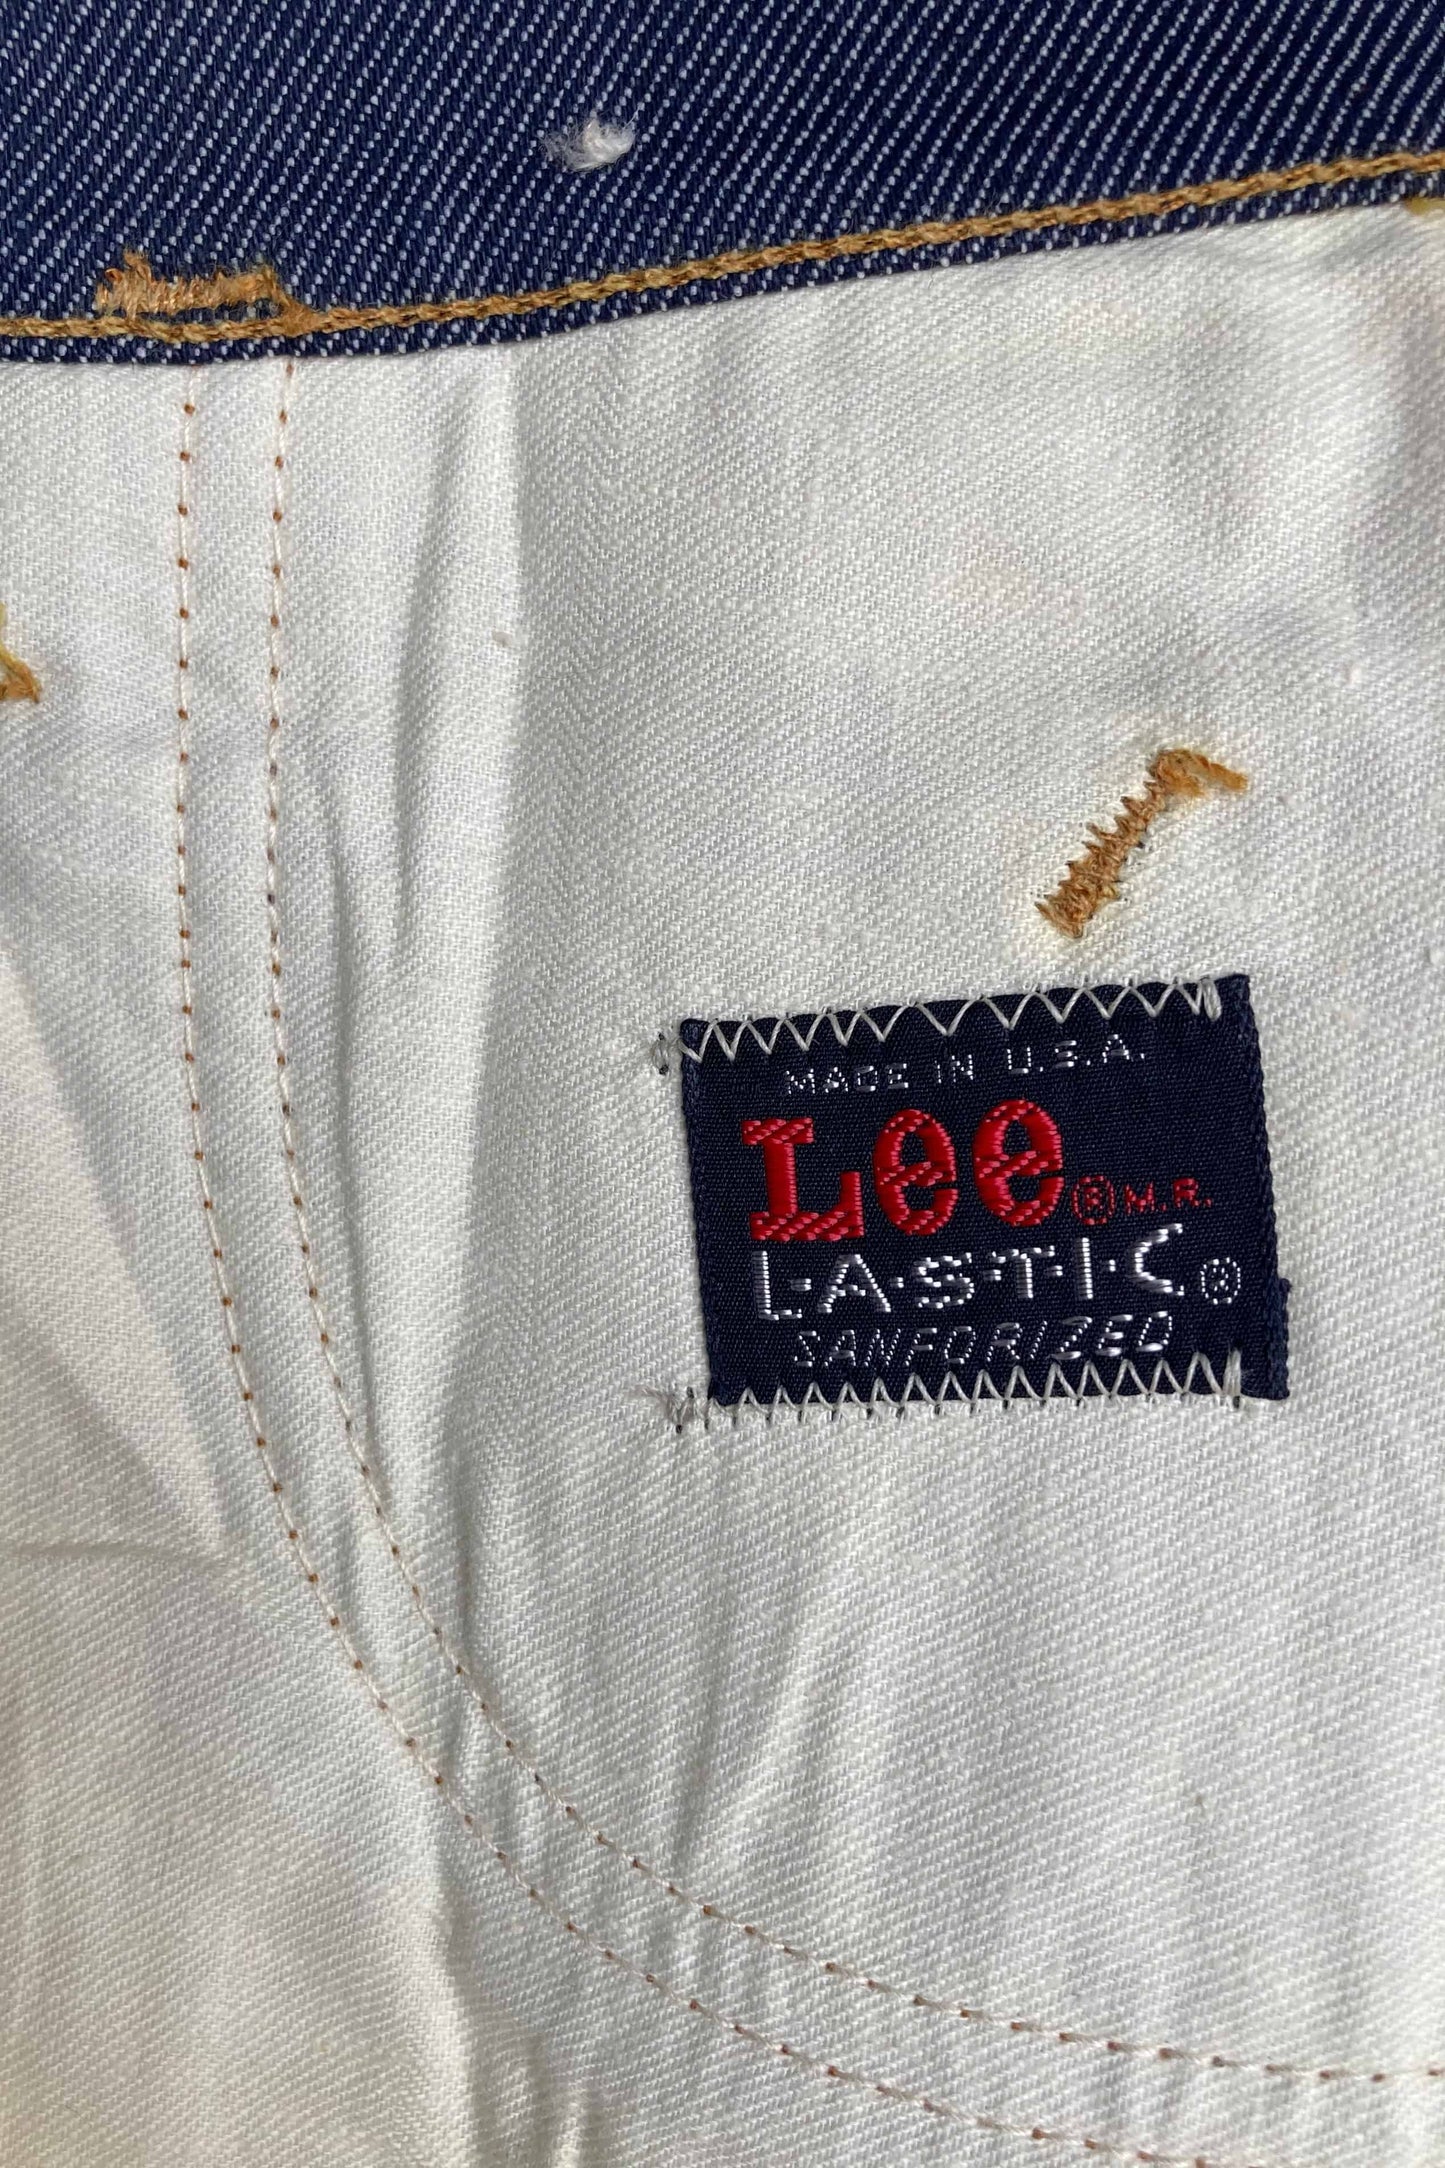 Close shot of the inside label of a vintage Lee lastic jeans